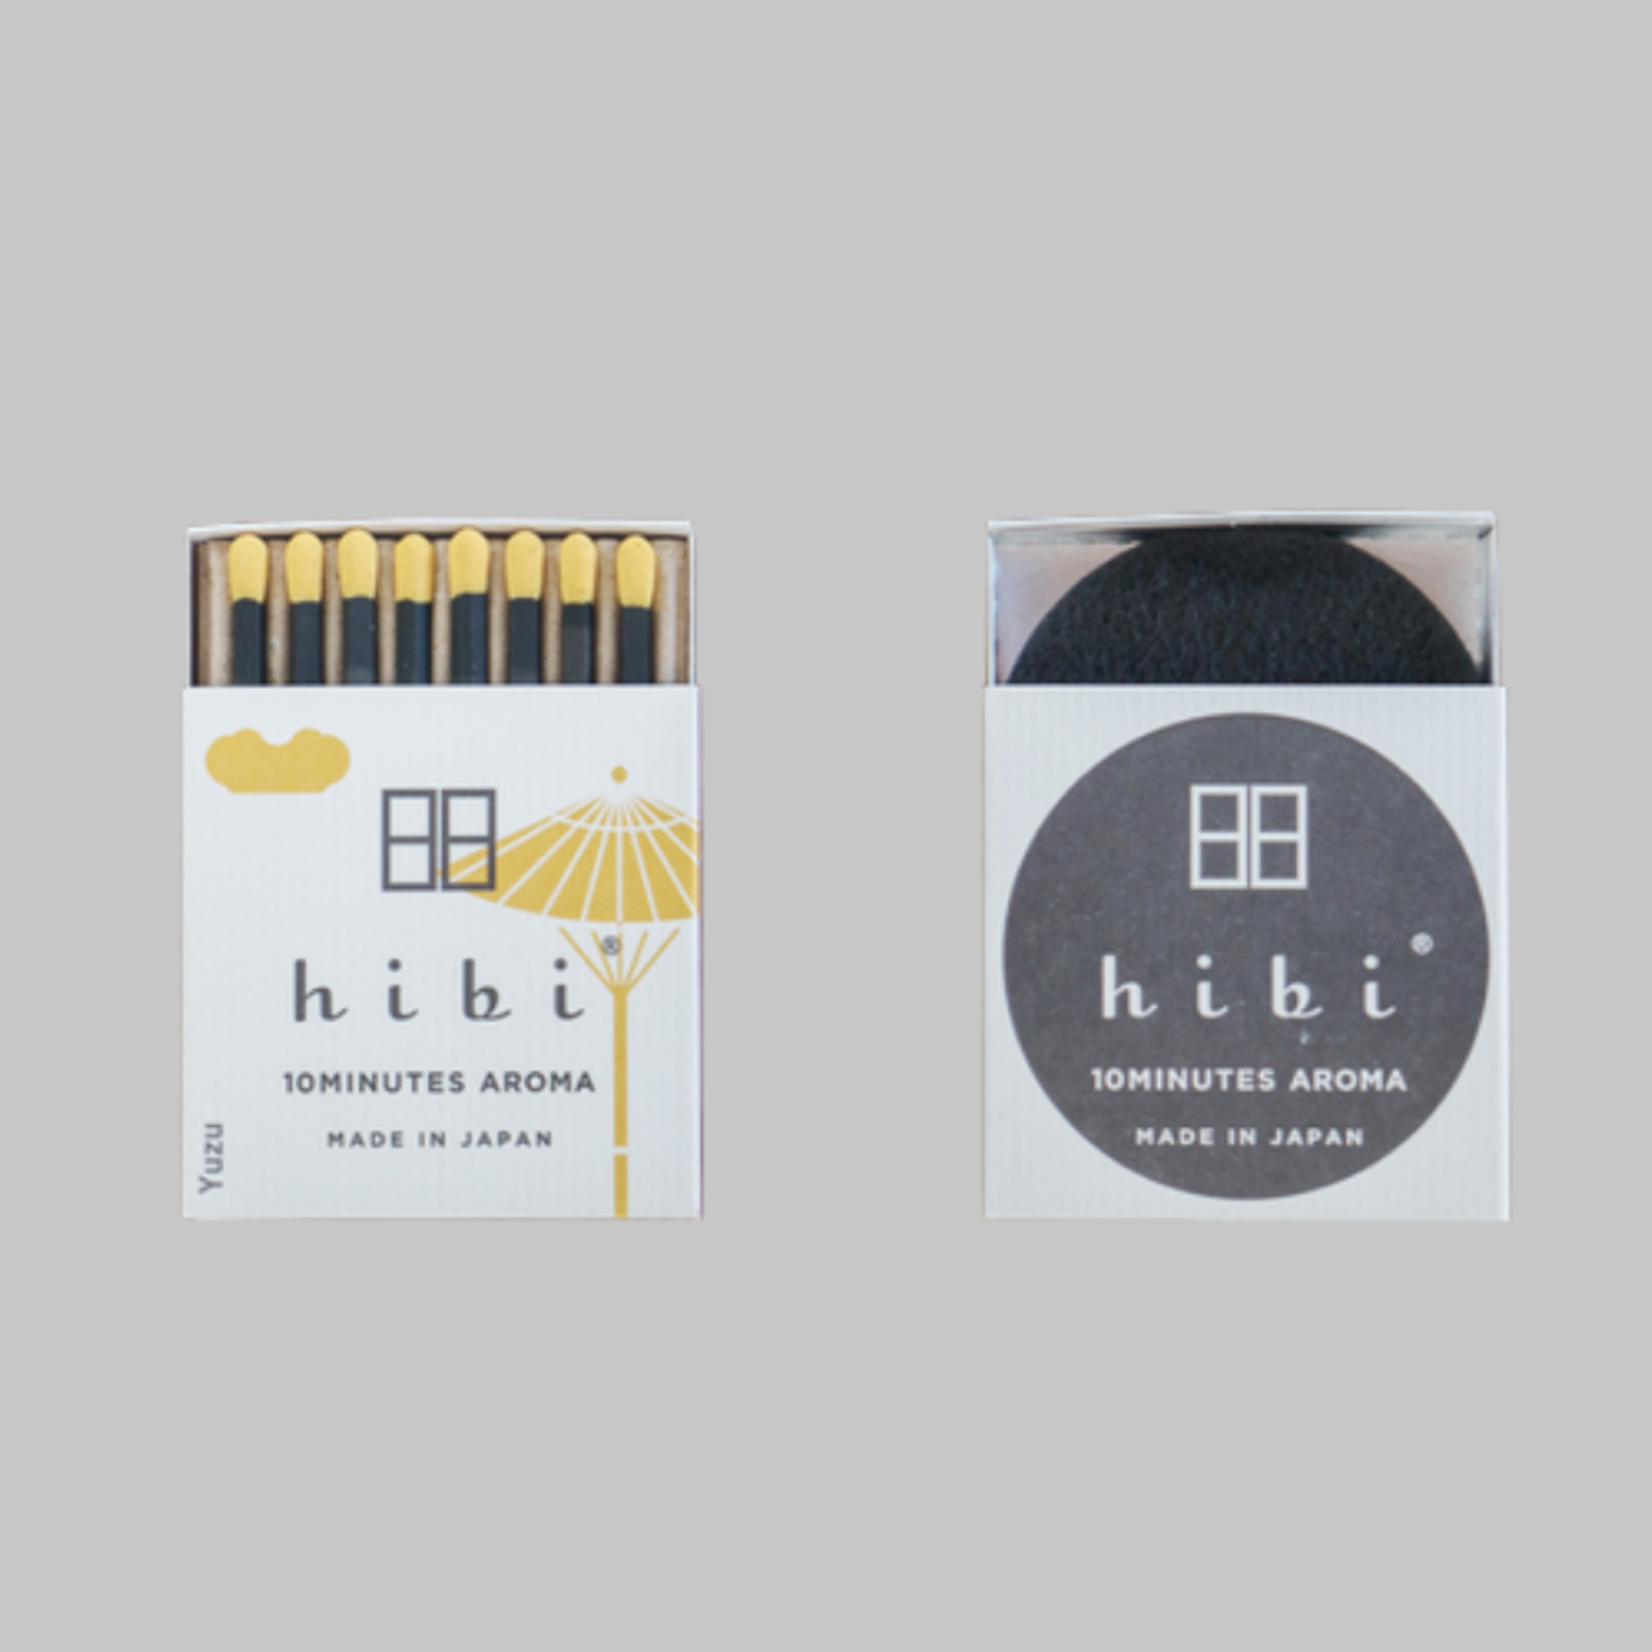 Hibi Incense | Yuzu